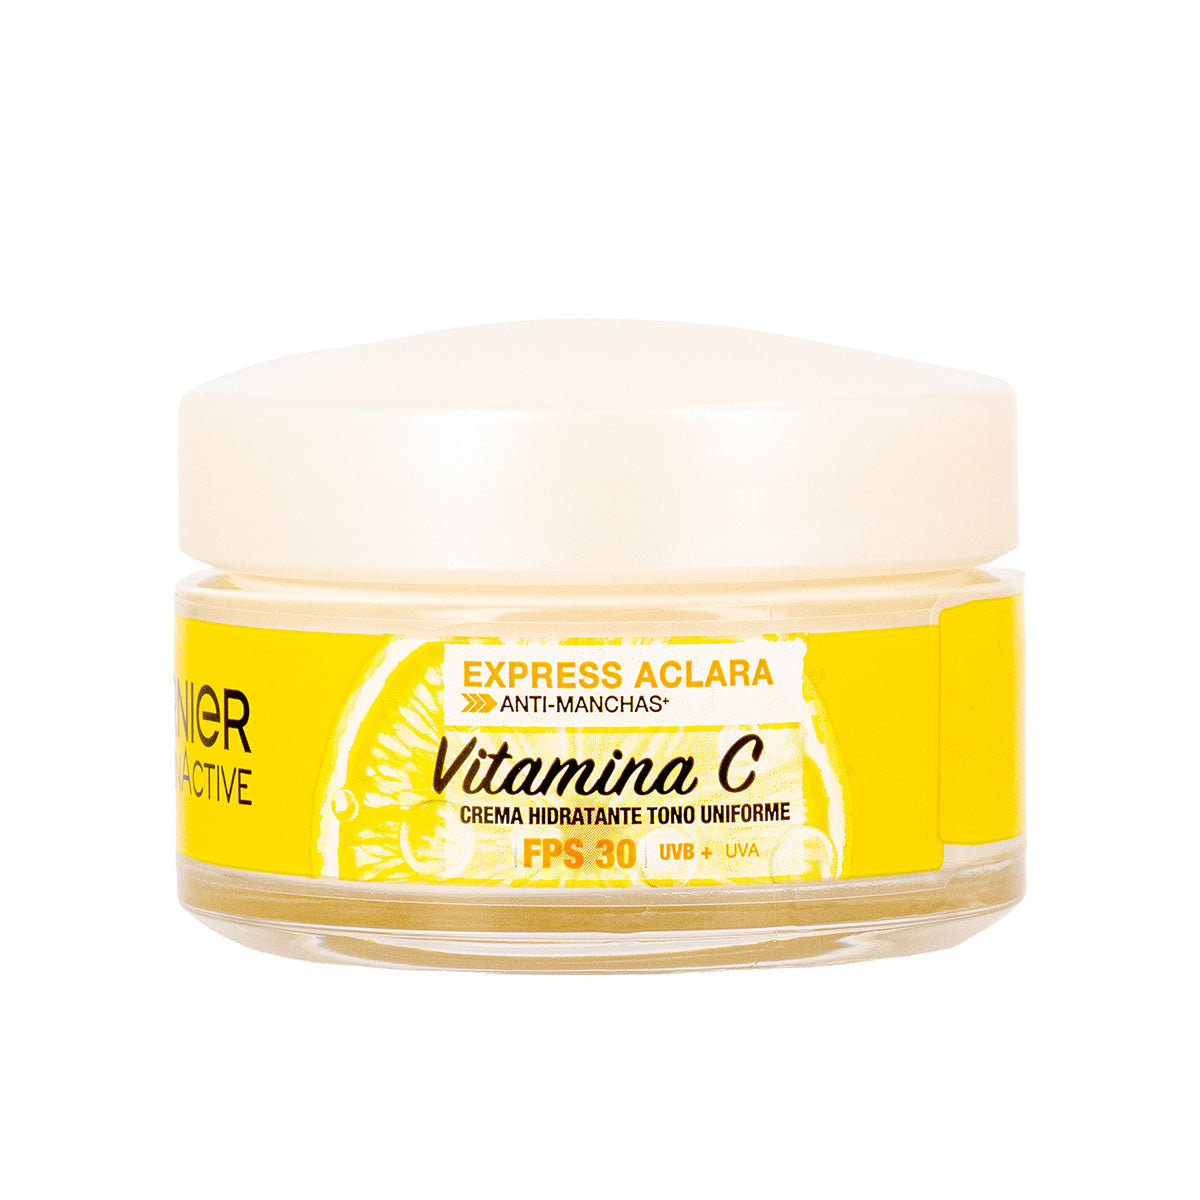 Vitamina C Crema Hidratante Tono Uniforme